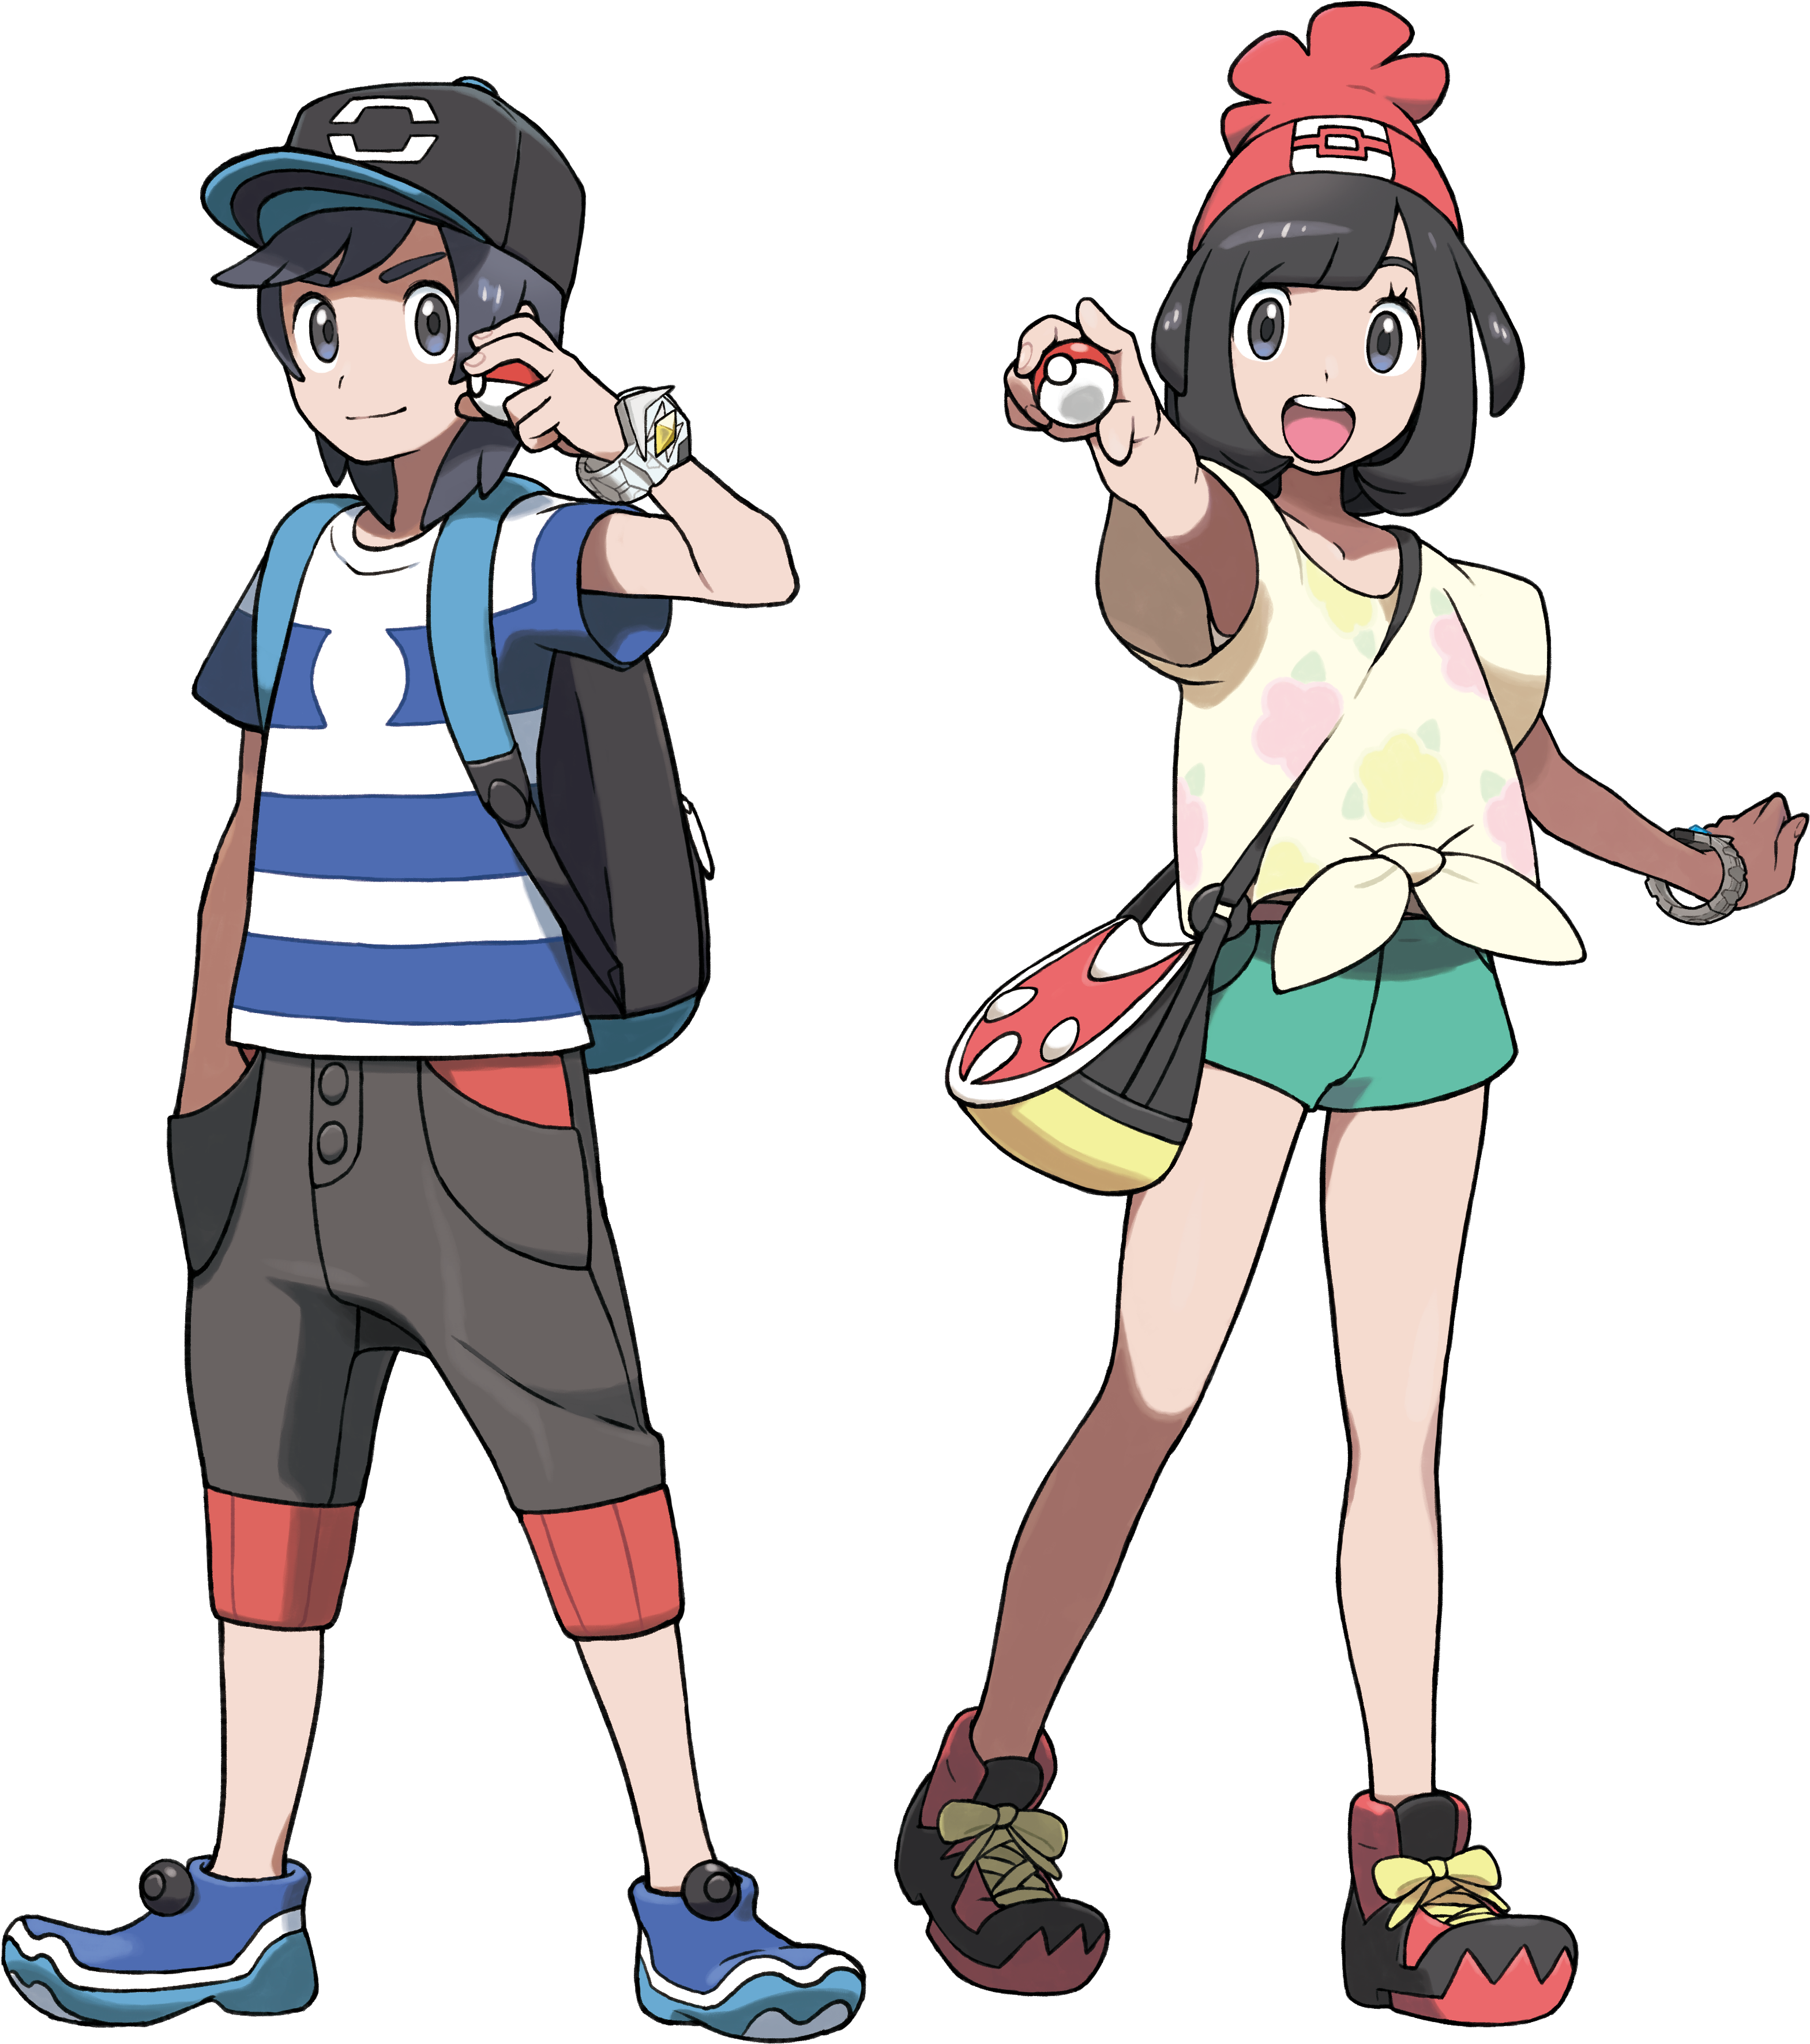 Main Characters Rgb 300dpi - Sun Pokemon Sun And Moon.